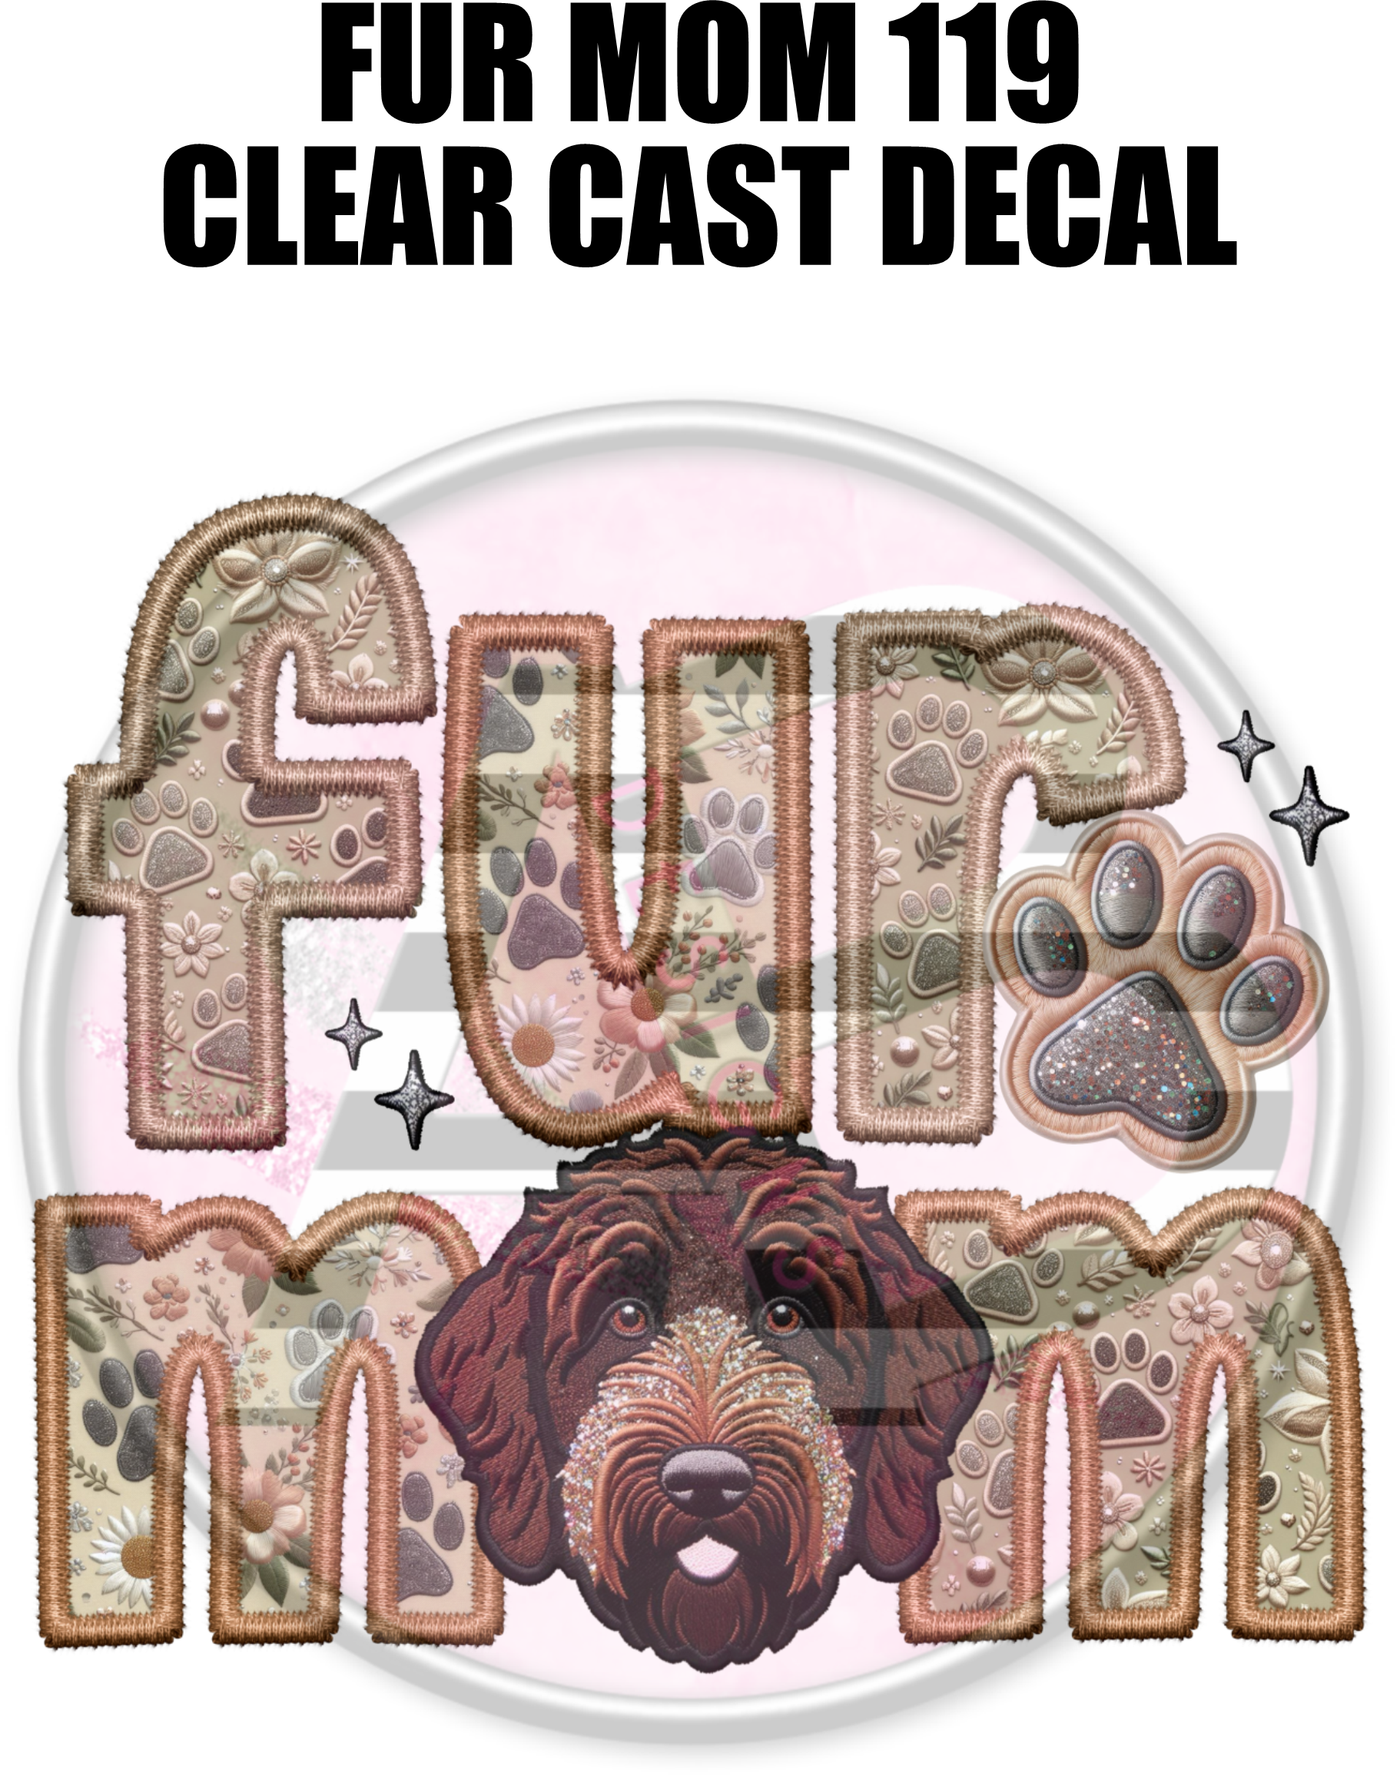 Fur Mom 119 - Clear Cast Decal